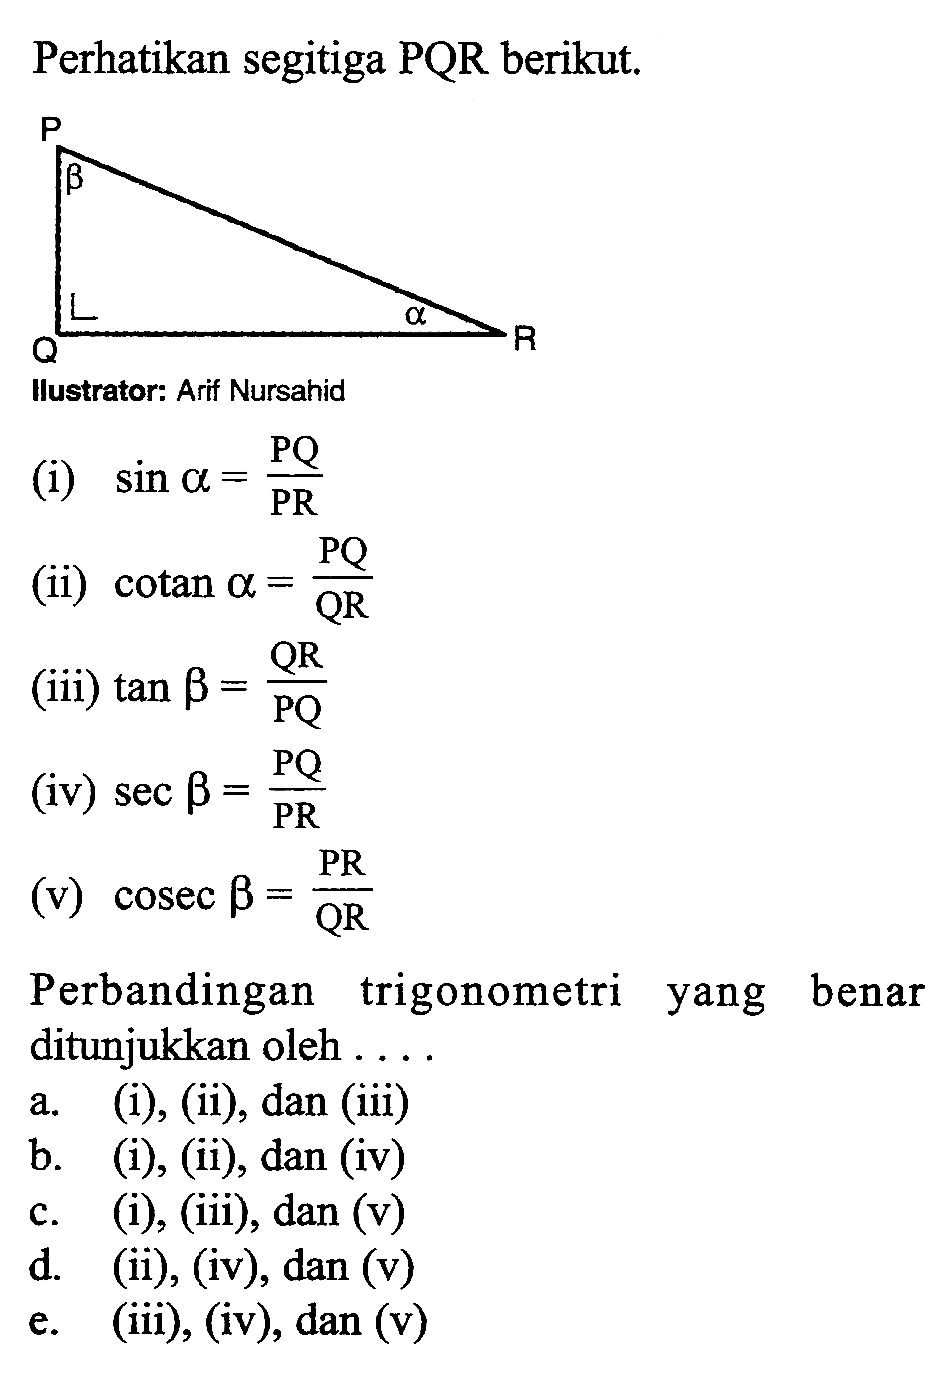 Perhatikan segitiga PQR berikut.llustrator: Arif Nursahid(i)  sin a=PQ/PR (ii)  cotan a=PQ/QR (iii)  tan b=QR/PQ (iv)  sec b=P Q/P R (v)  cosec b=PR/QR Perbandingan trigonometri yang benar ditunjukkan oleh ....